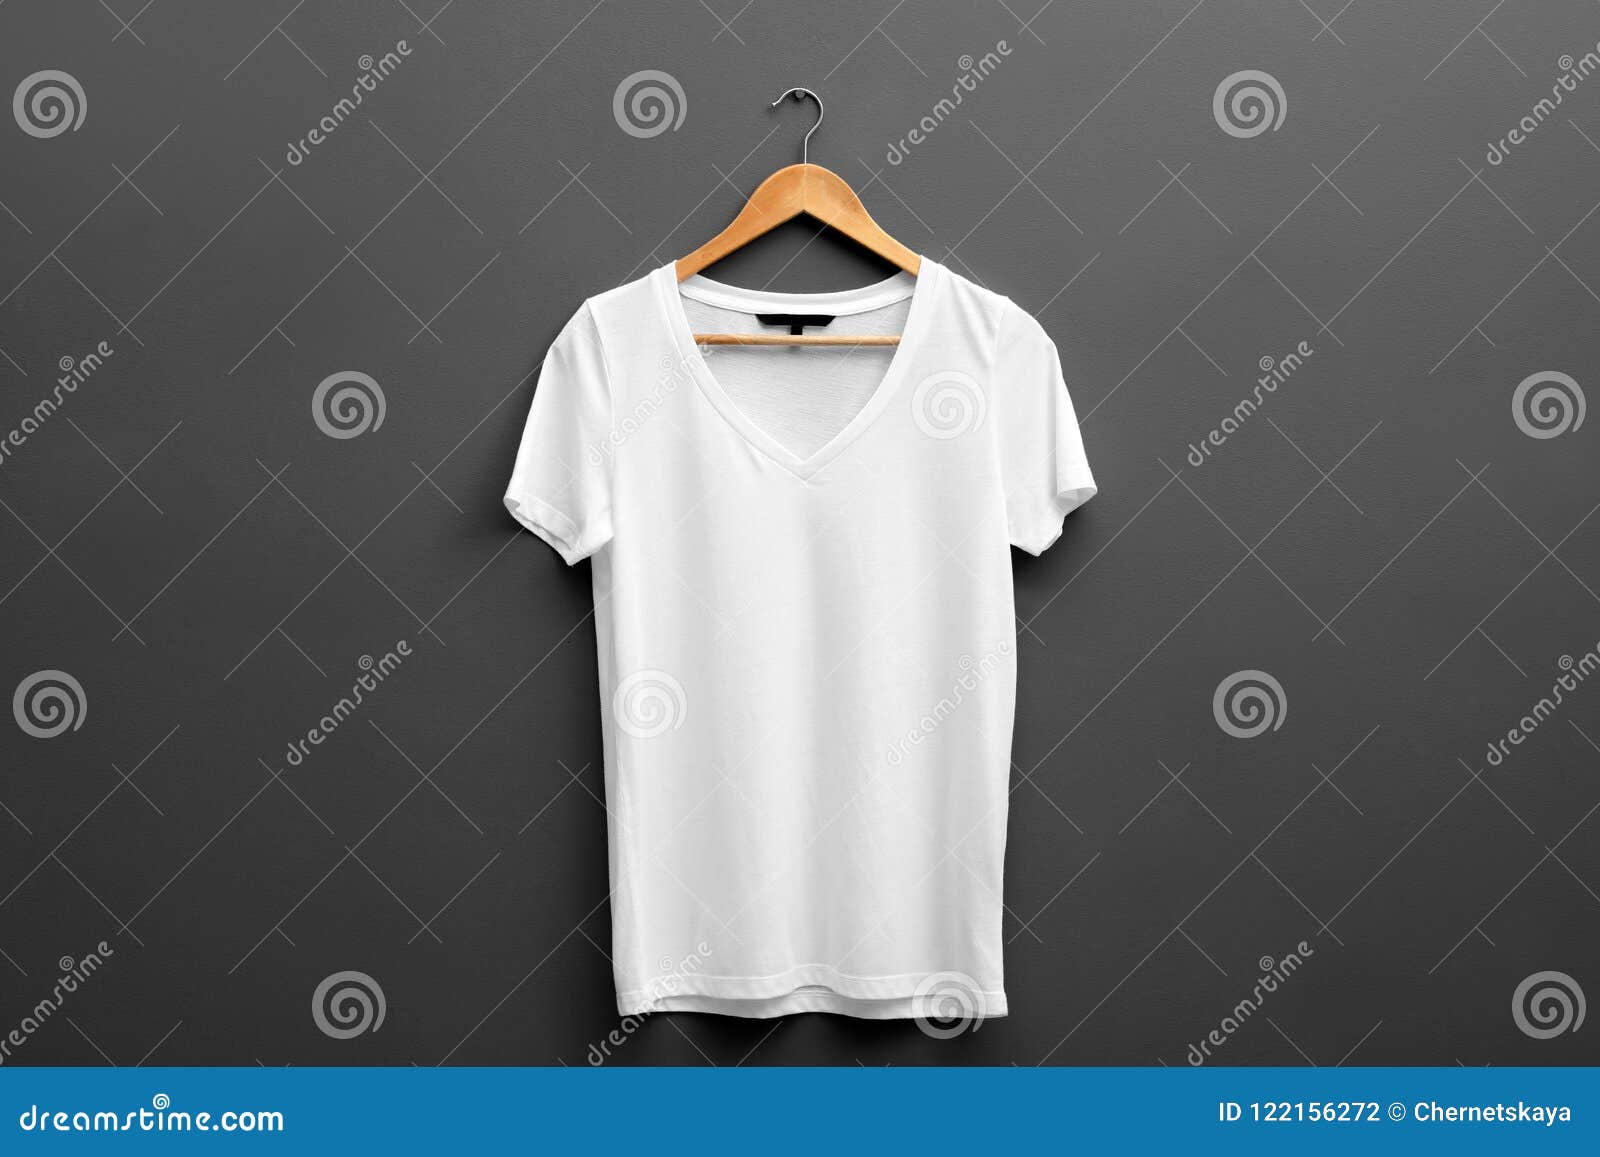 Белая футболка на вешалке